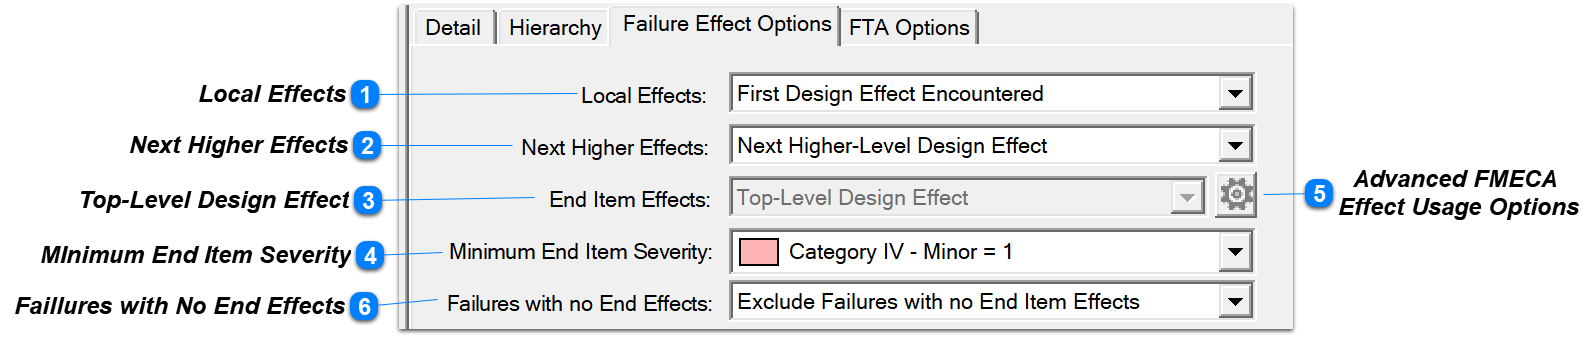 FMECA Failure Effect Options Setup